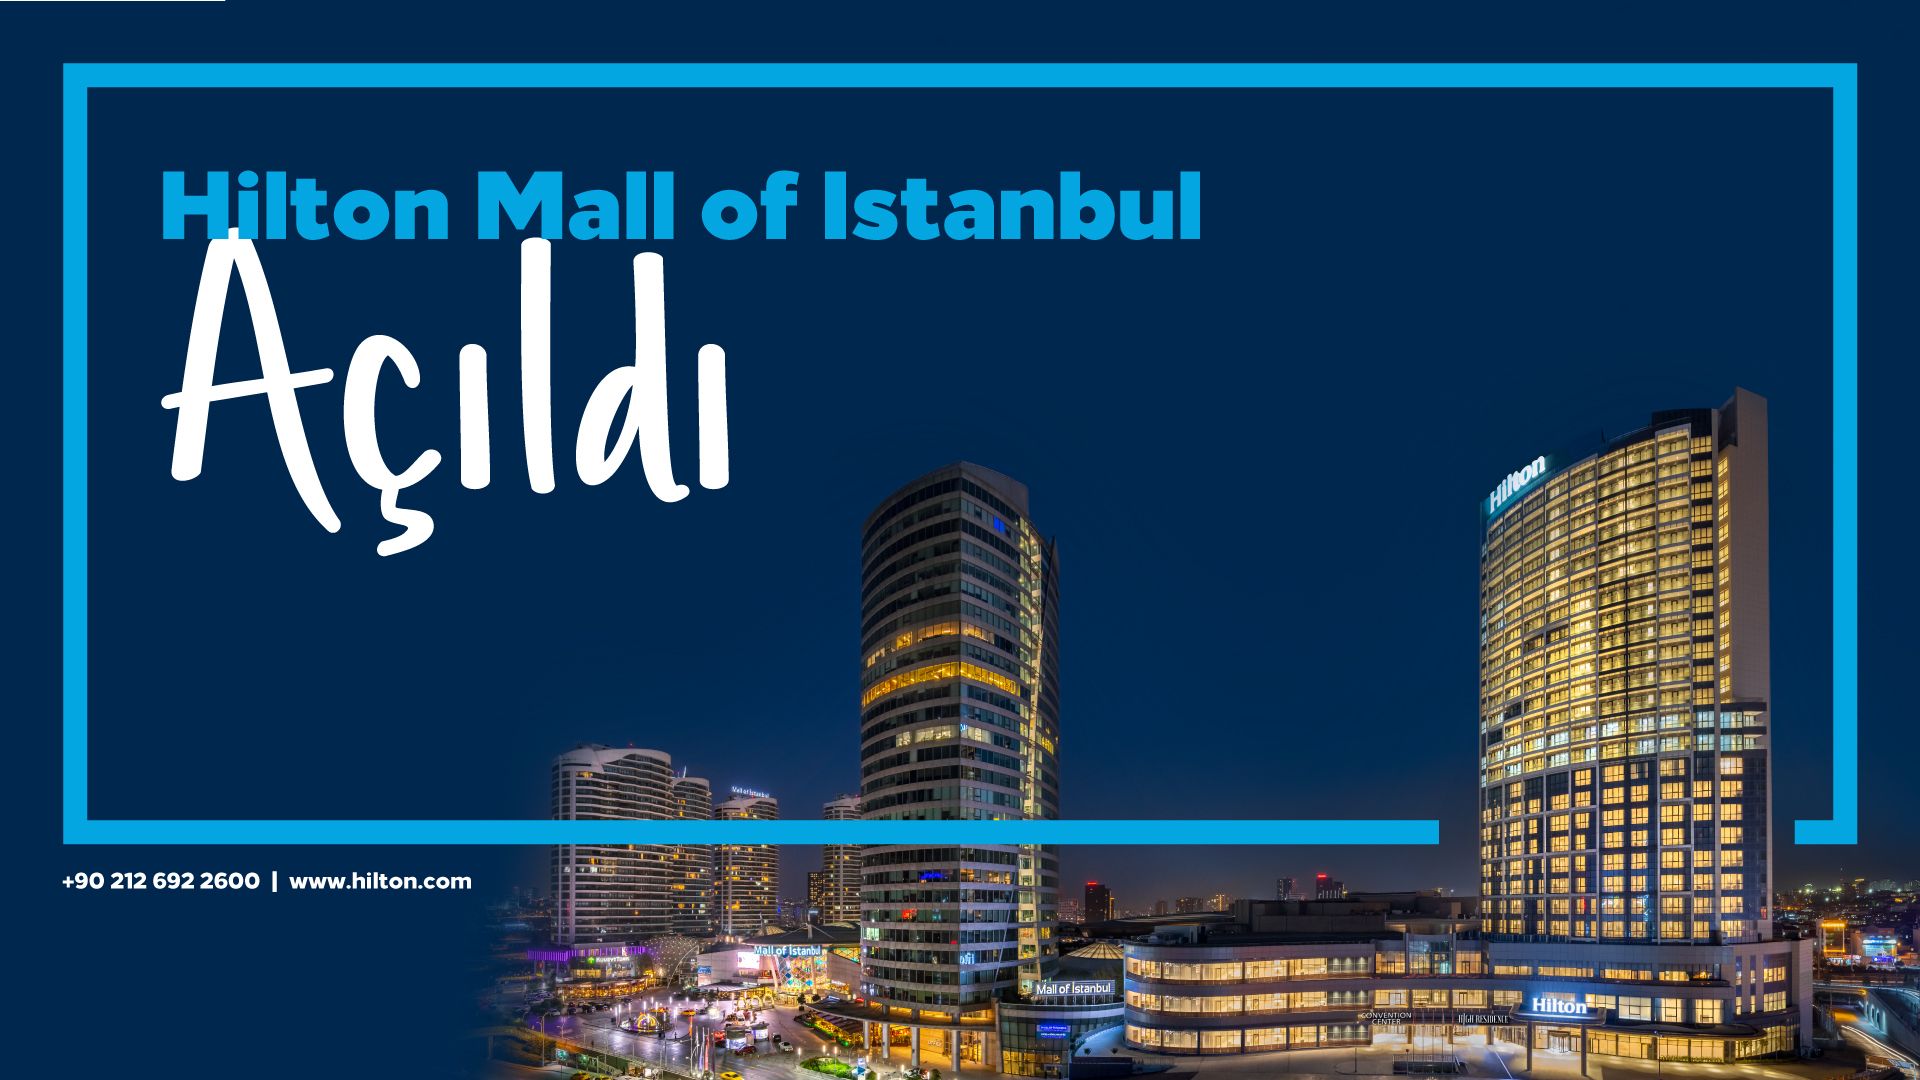 Hilton Mall of İstanbul açıldı